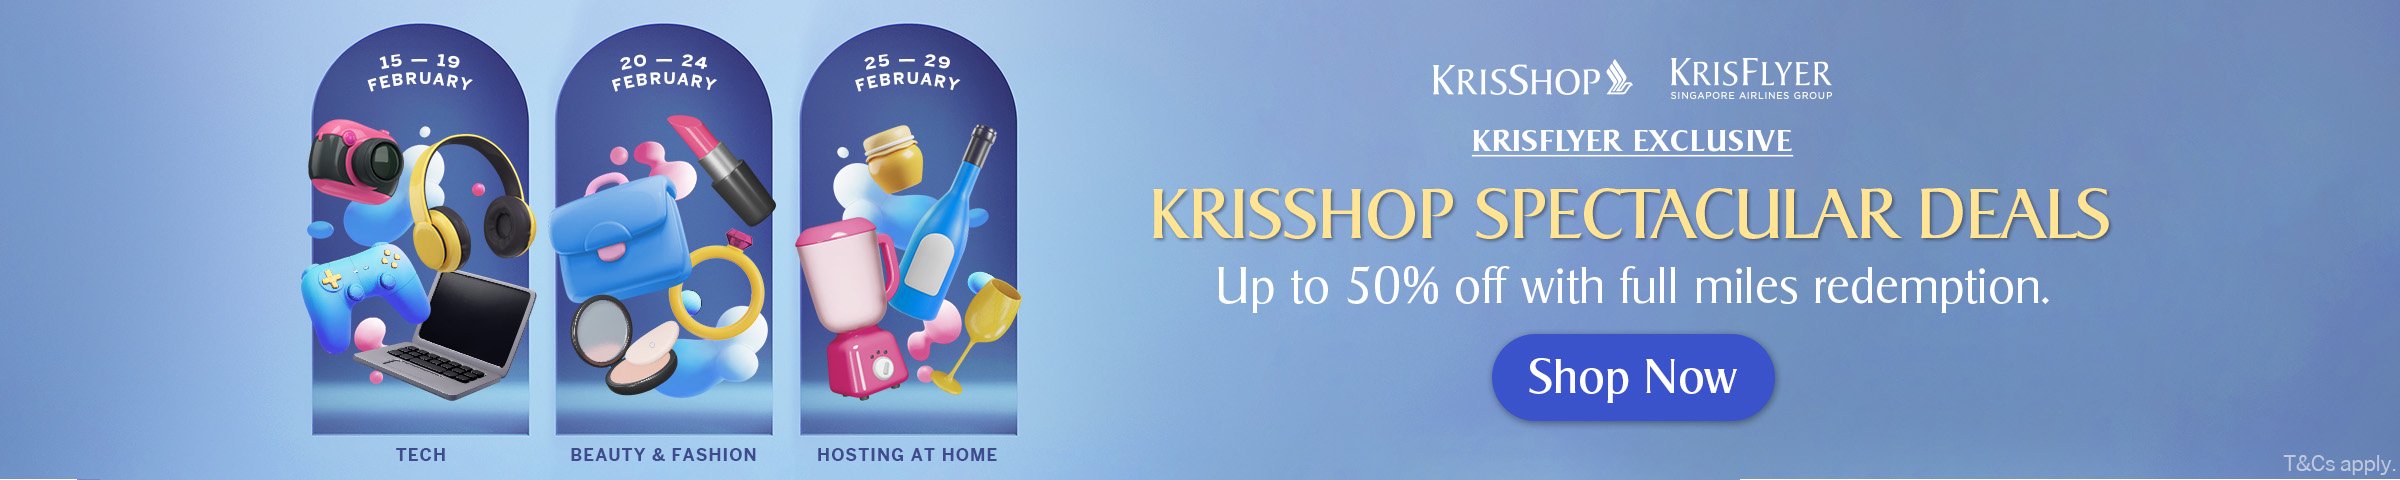 KrisShop's Spectacular Deals